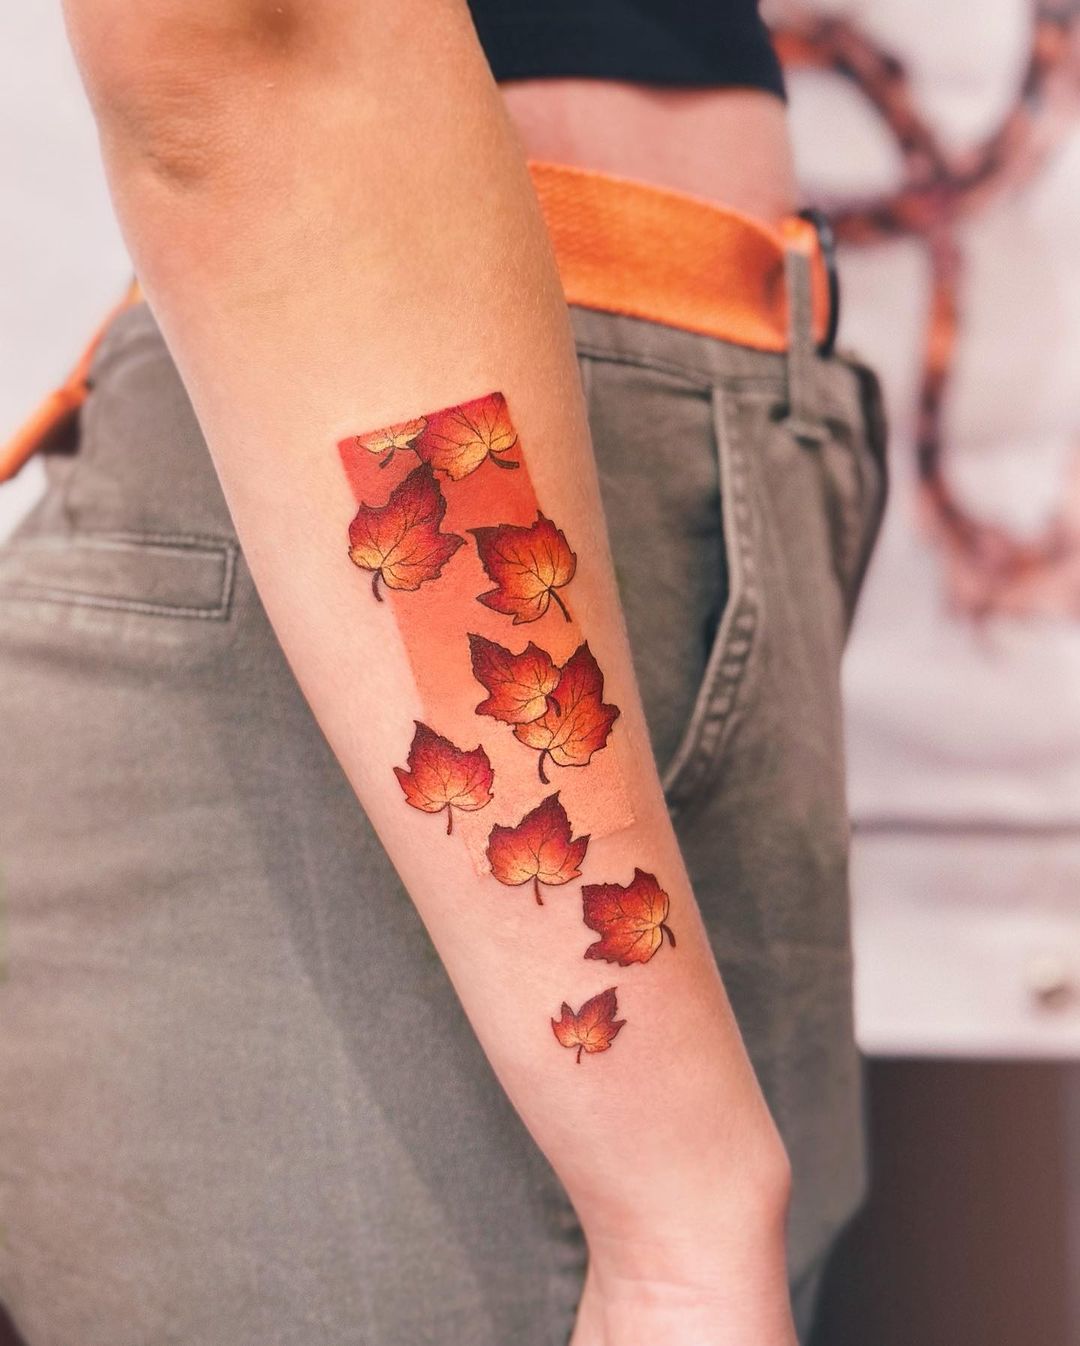 Autumn tattoo ideas on arm by gabyowl